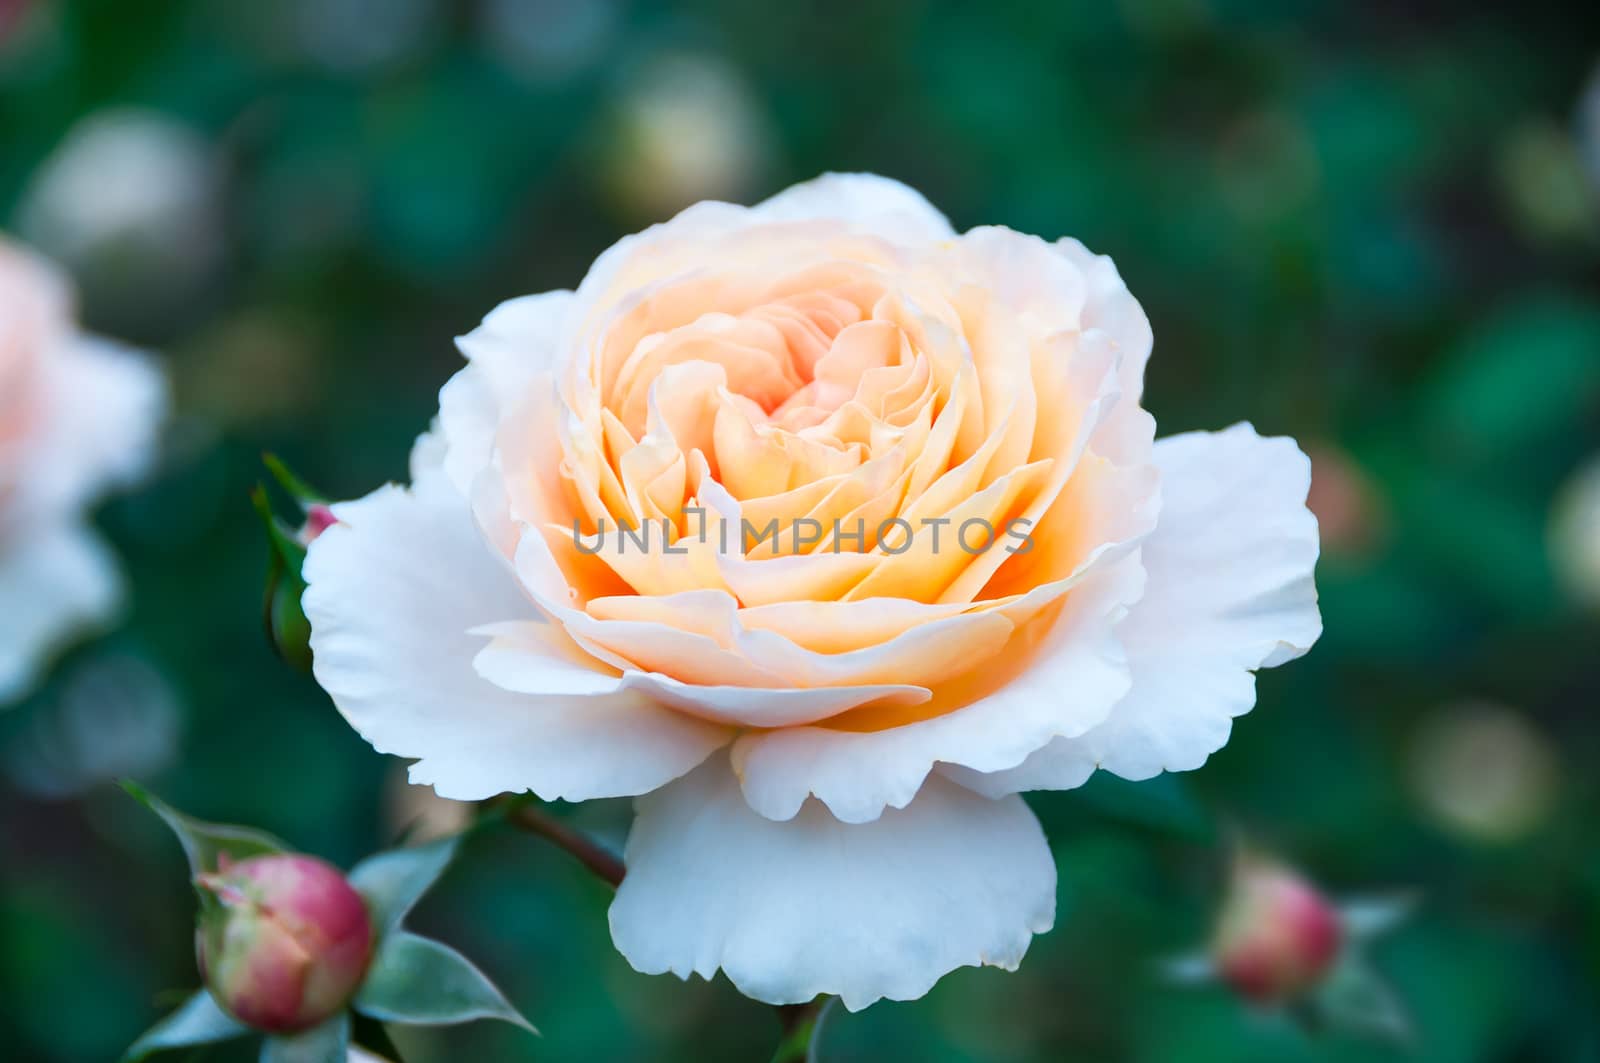 Flower pink rose on a natural background